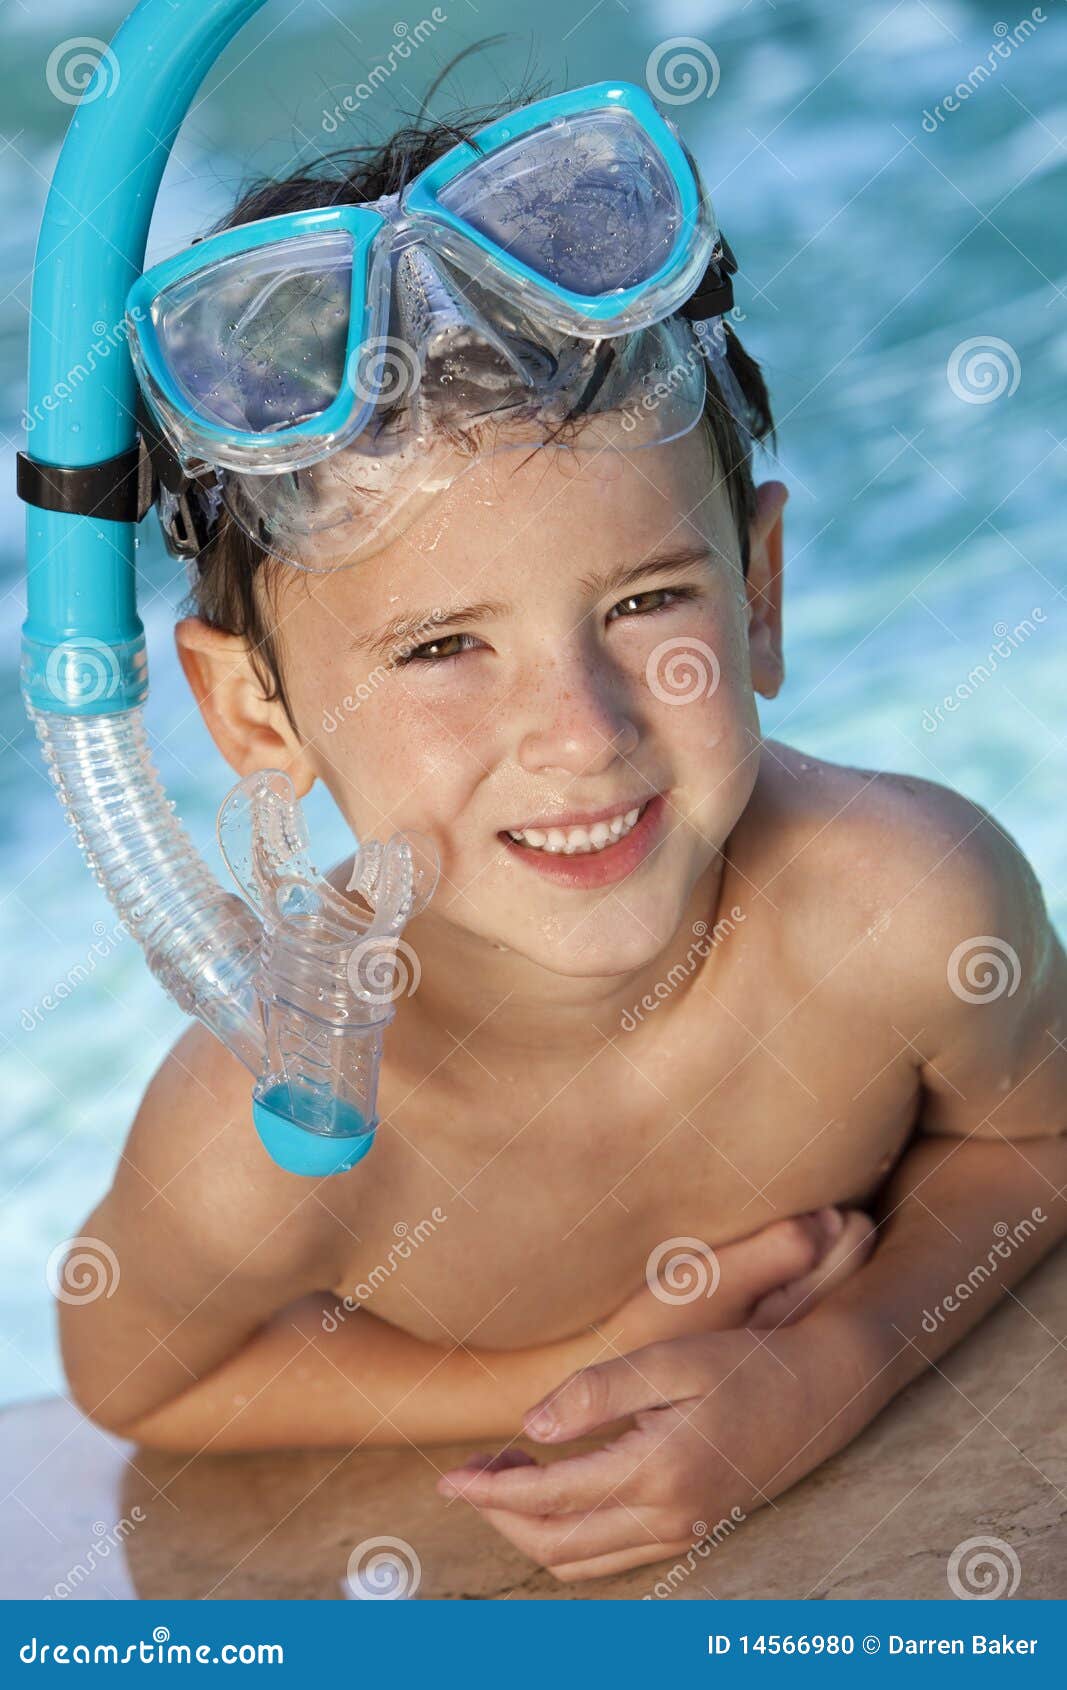 Teenage Boy Wearing Goggles And Towel At Swimming Pool 